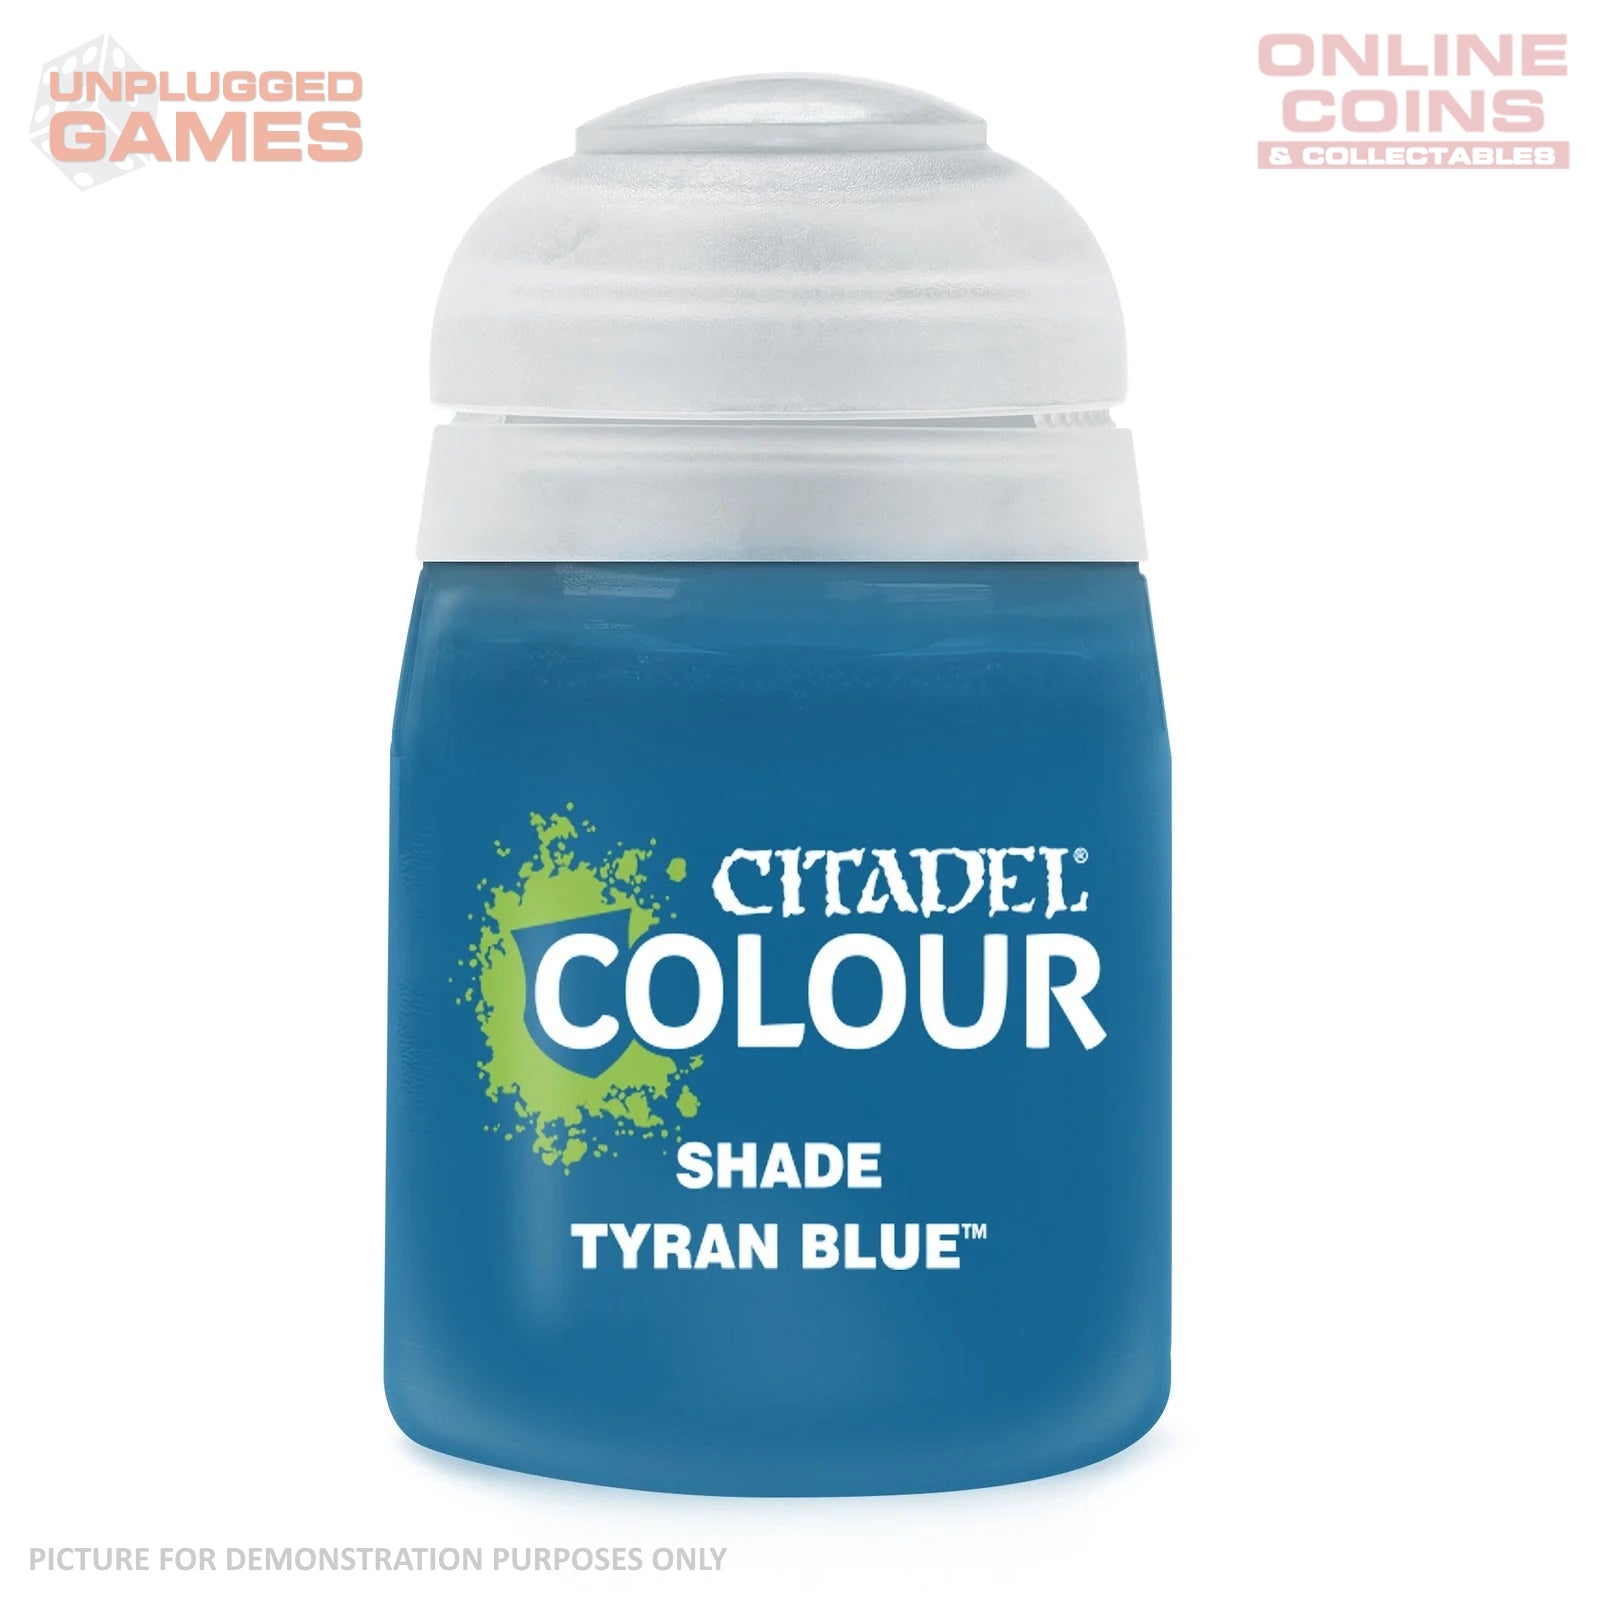 Citadel Shade - 24-33 Tyran Blue